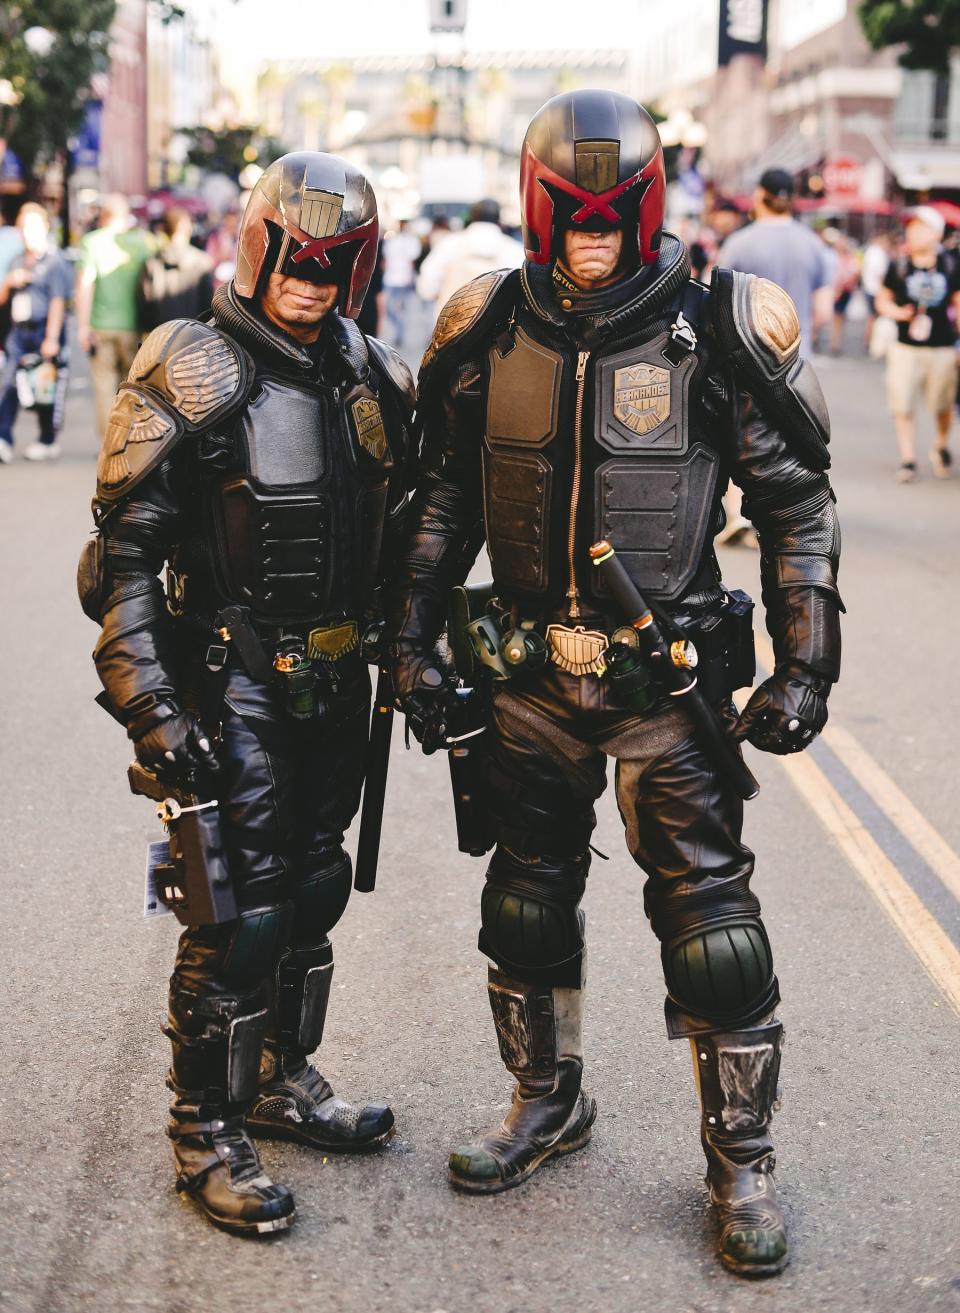 Judge Dredd cosplayers